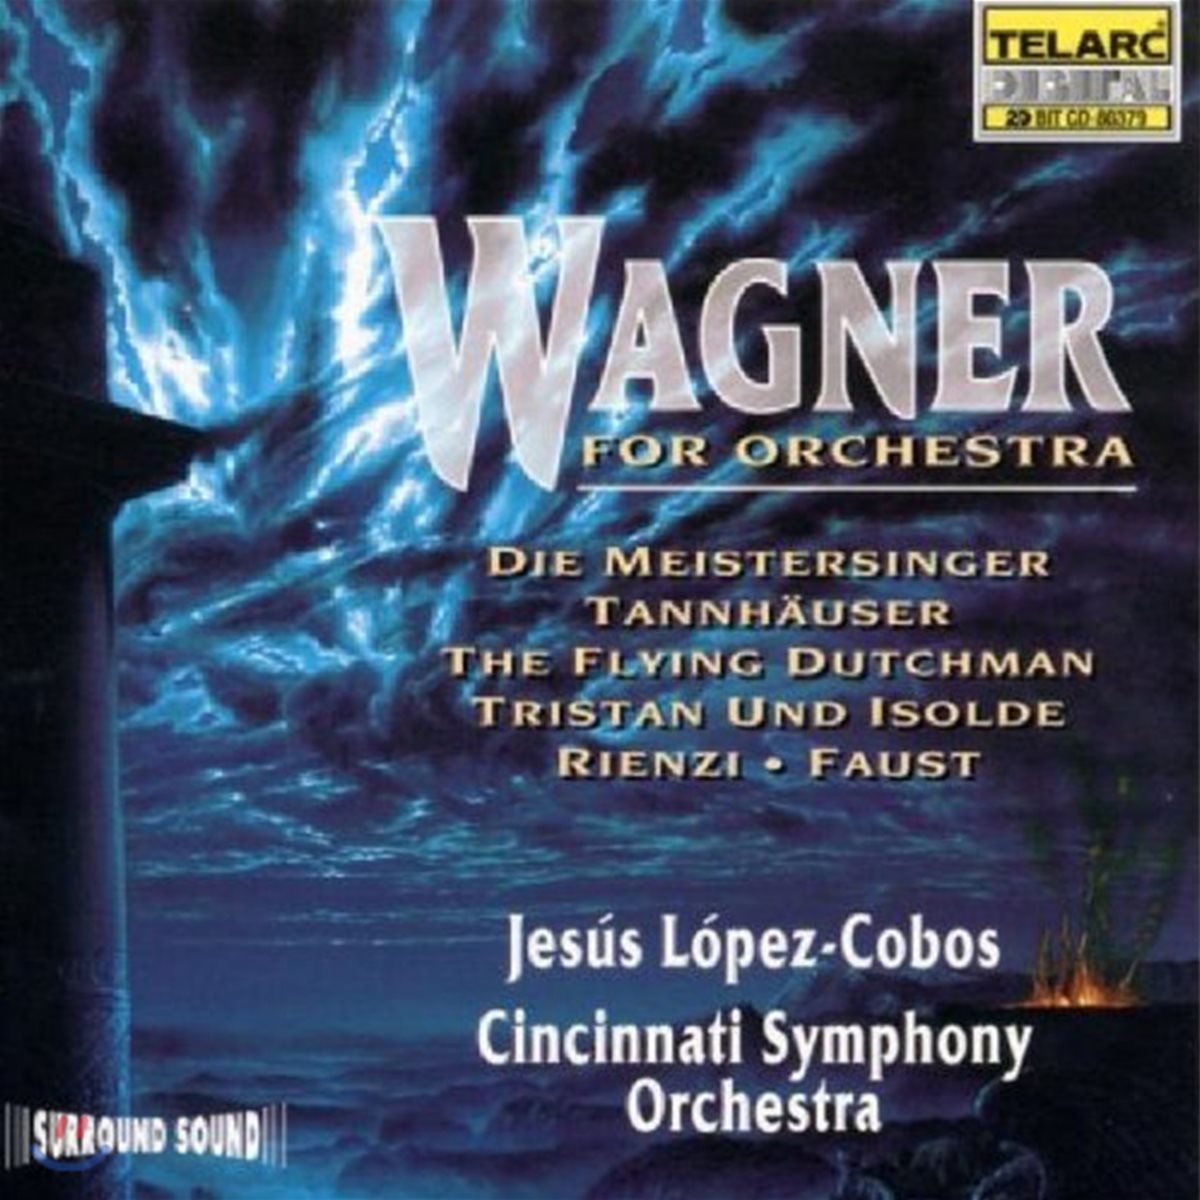 Jesus Lopez-Cobos 바그너: 관현악 모음곡 - 탄호이저, 방황하는 네덜란드인, 트리스탄과 이졸데 외 (Wagner for Orchestra: Tannhauser, The Flying Dutchman, Tristan und Isolde)